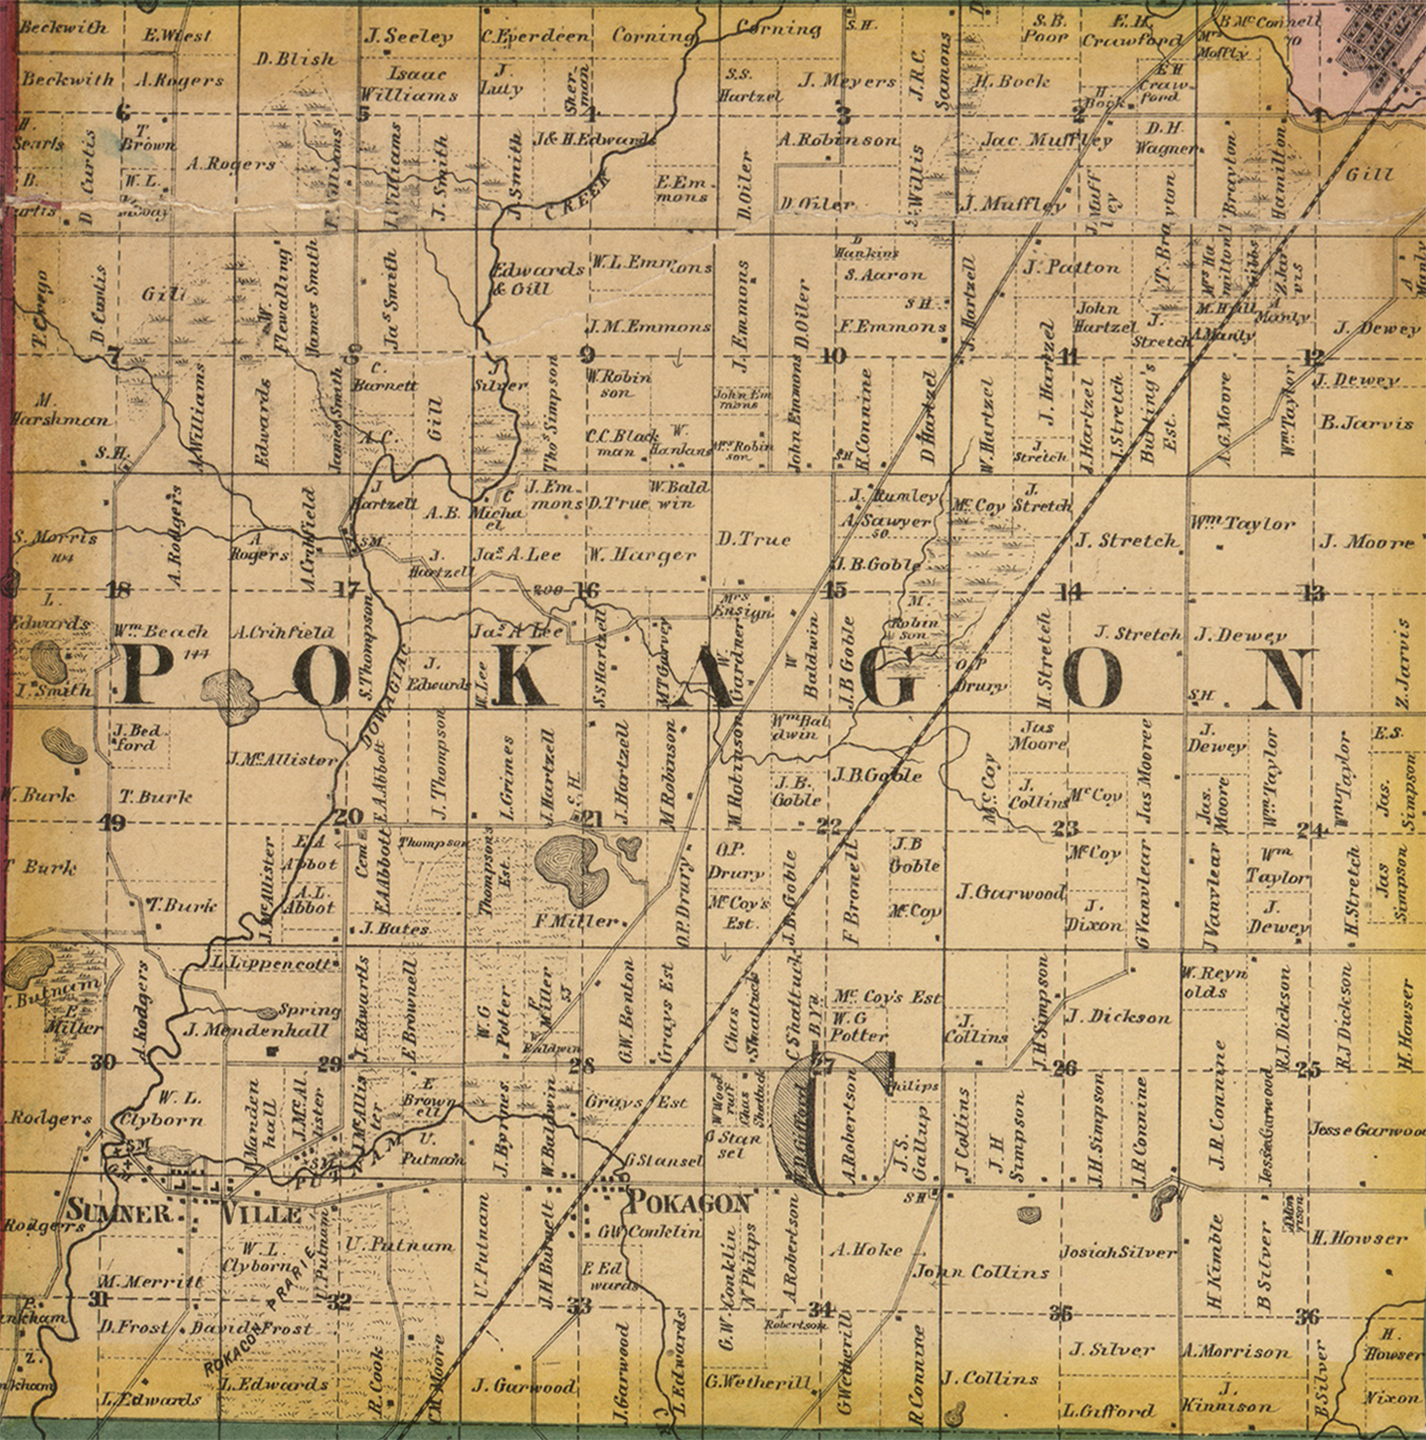 1860 Pokagon Michigan landownership map